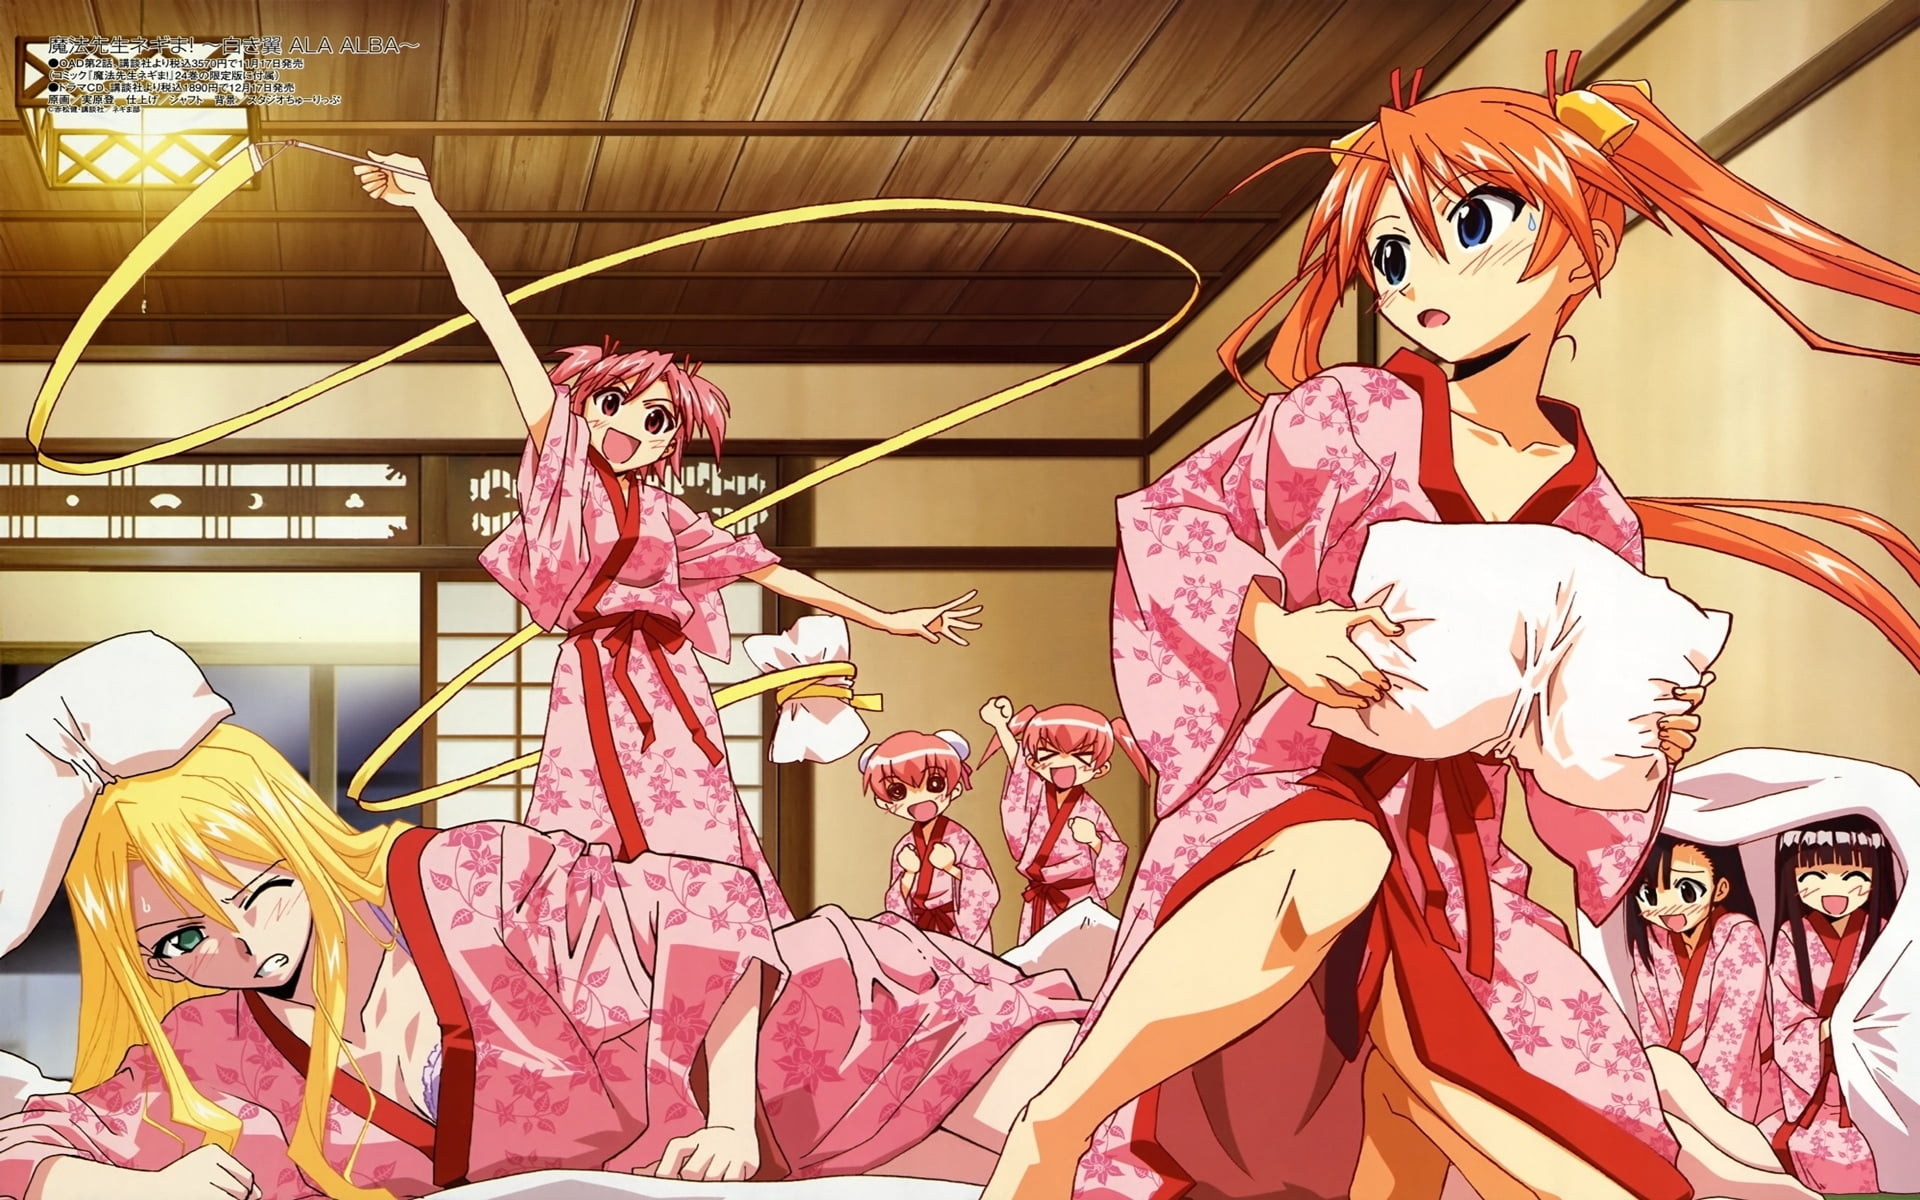 women wearing bathrobe inside room anime character digital wallpaper